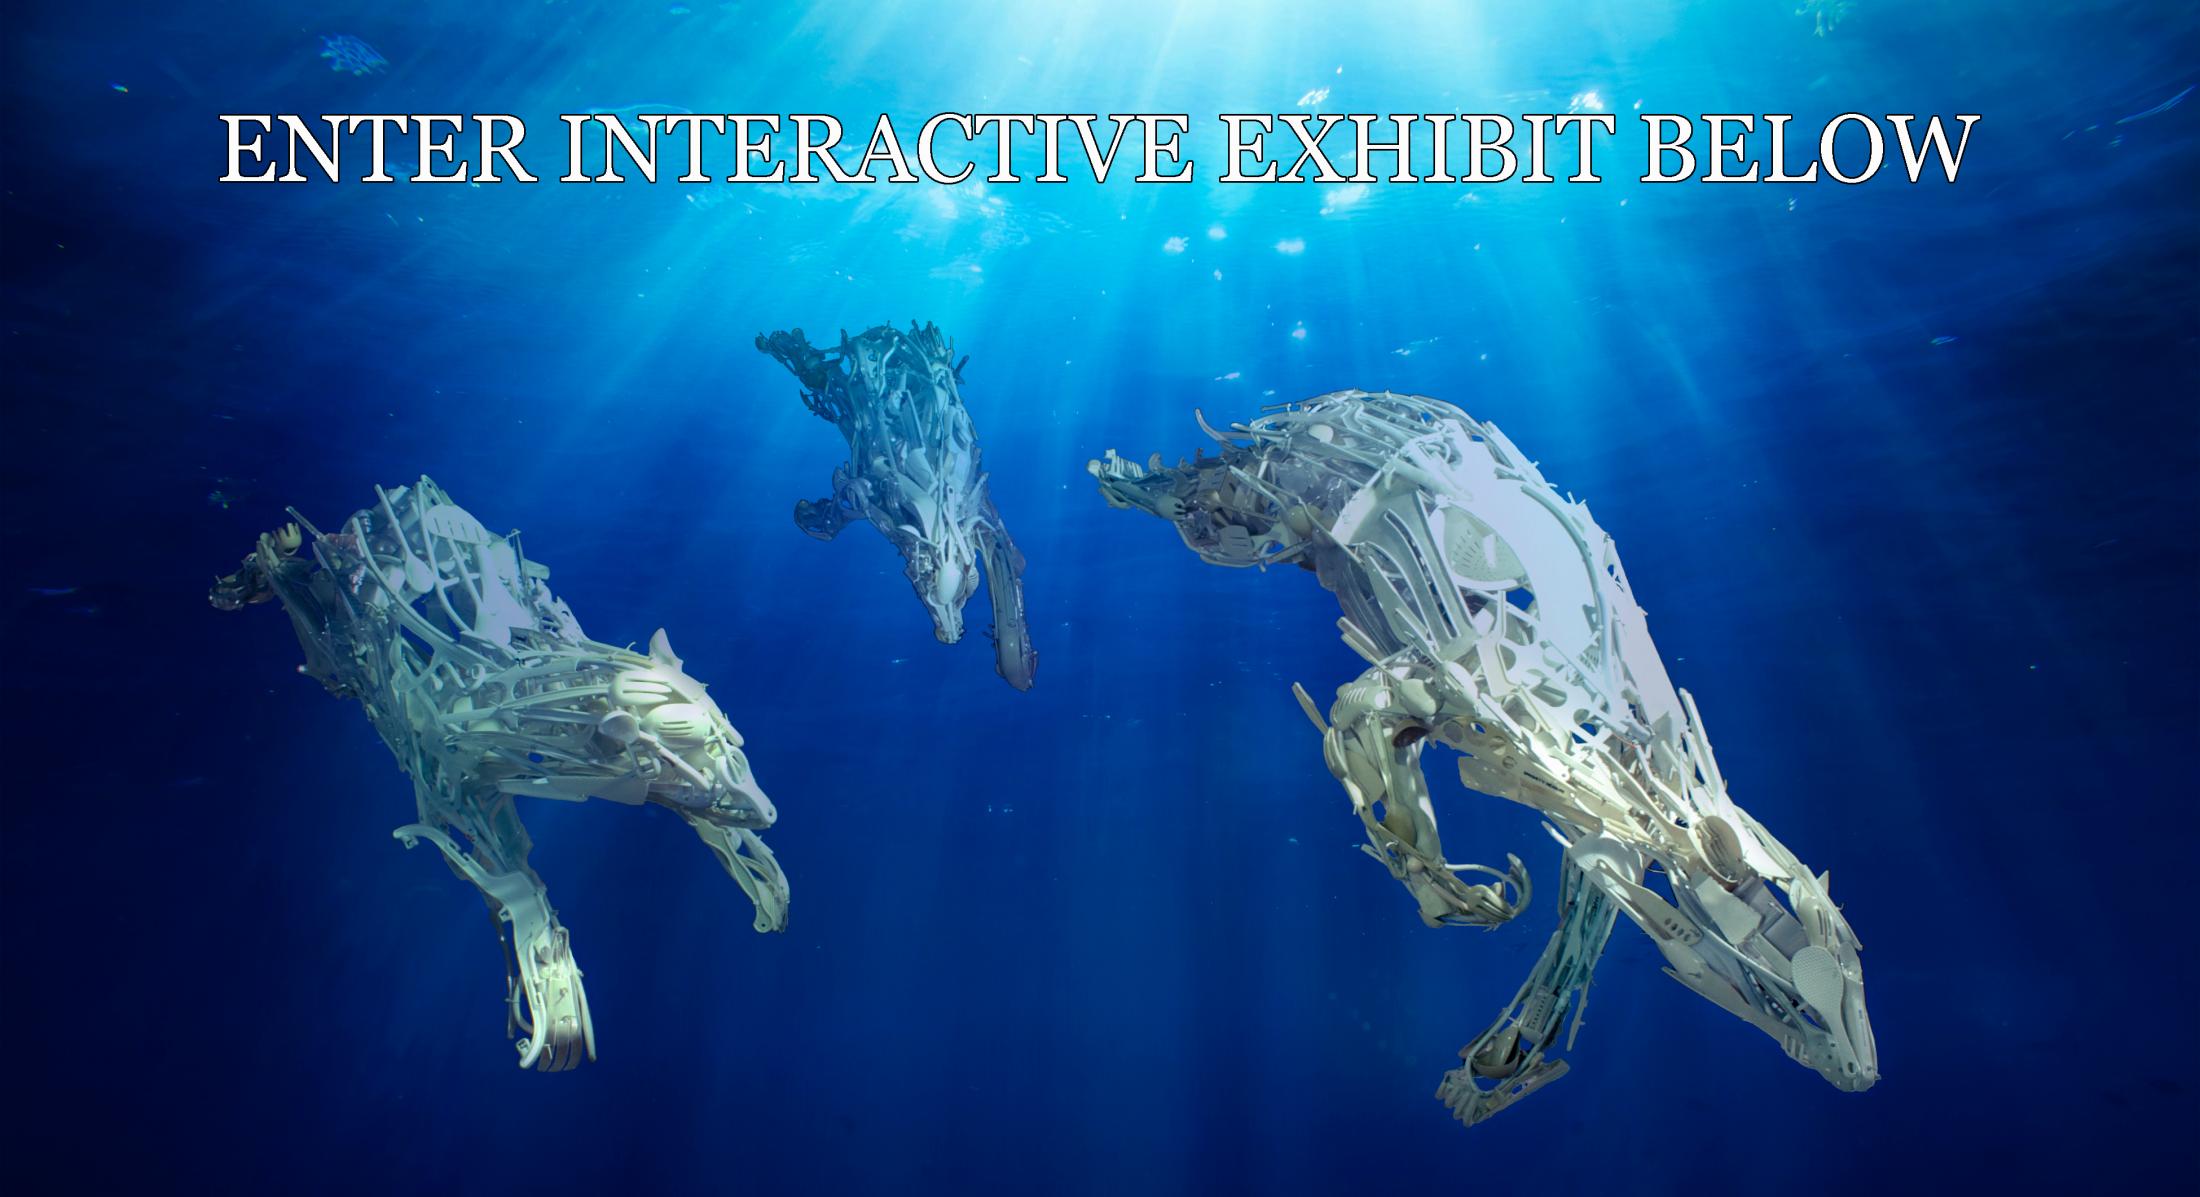 Enter Interactive Exhibit Below with Polar Bears Diving Down